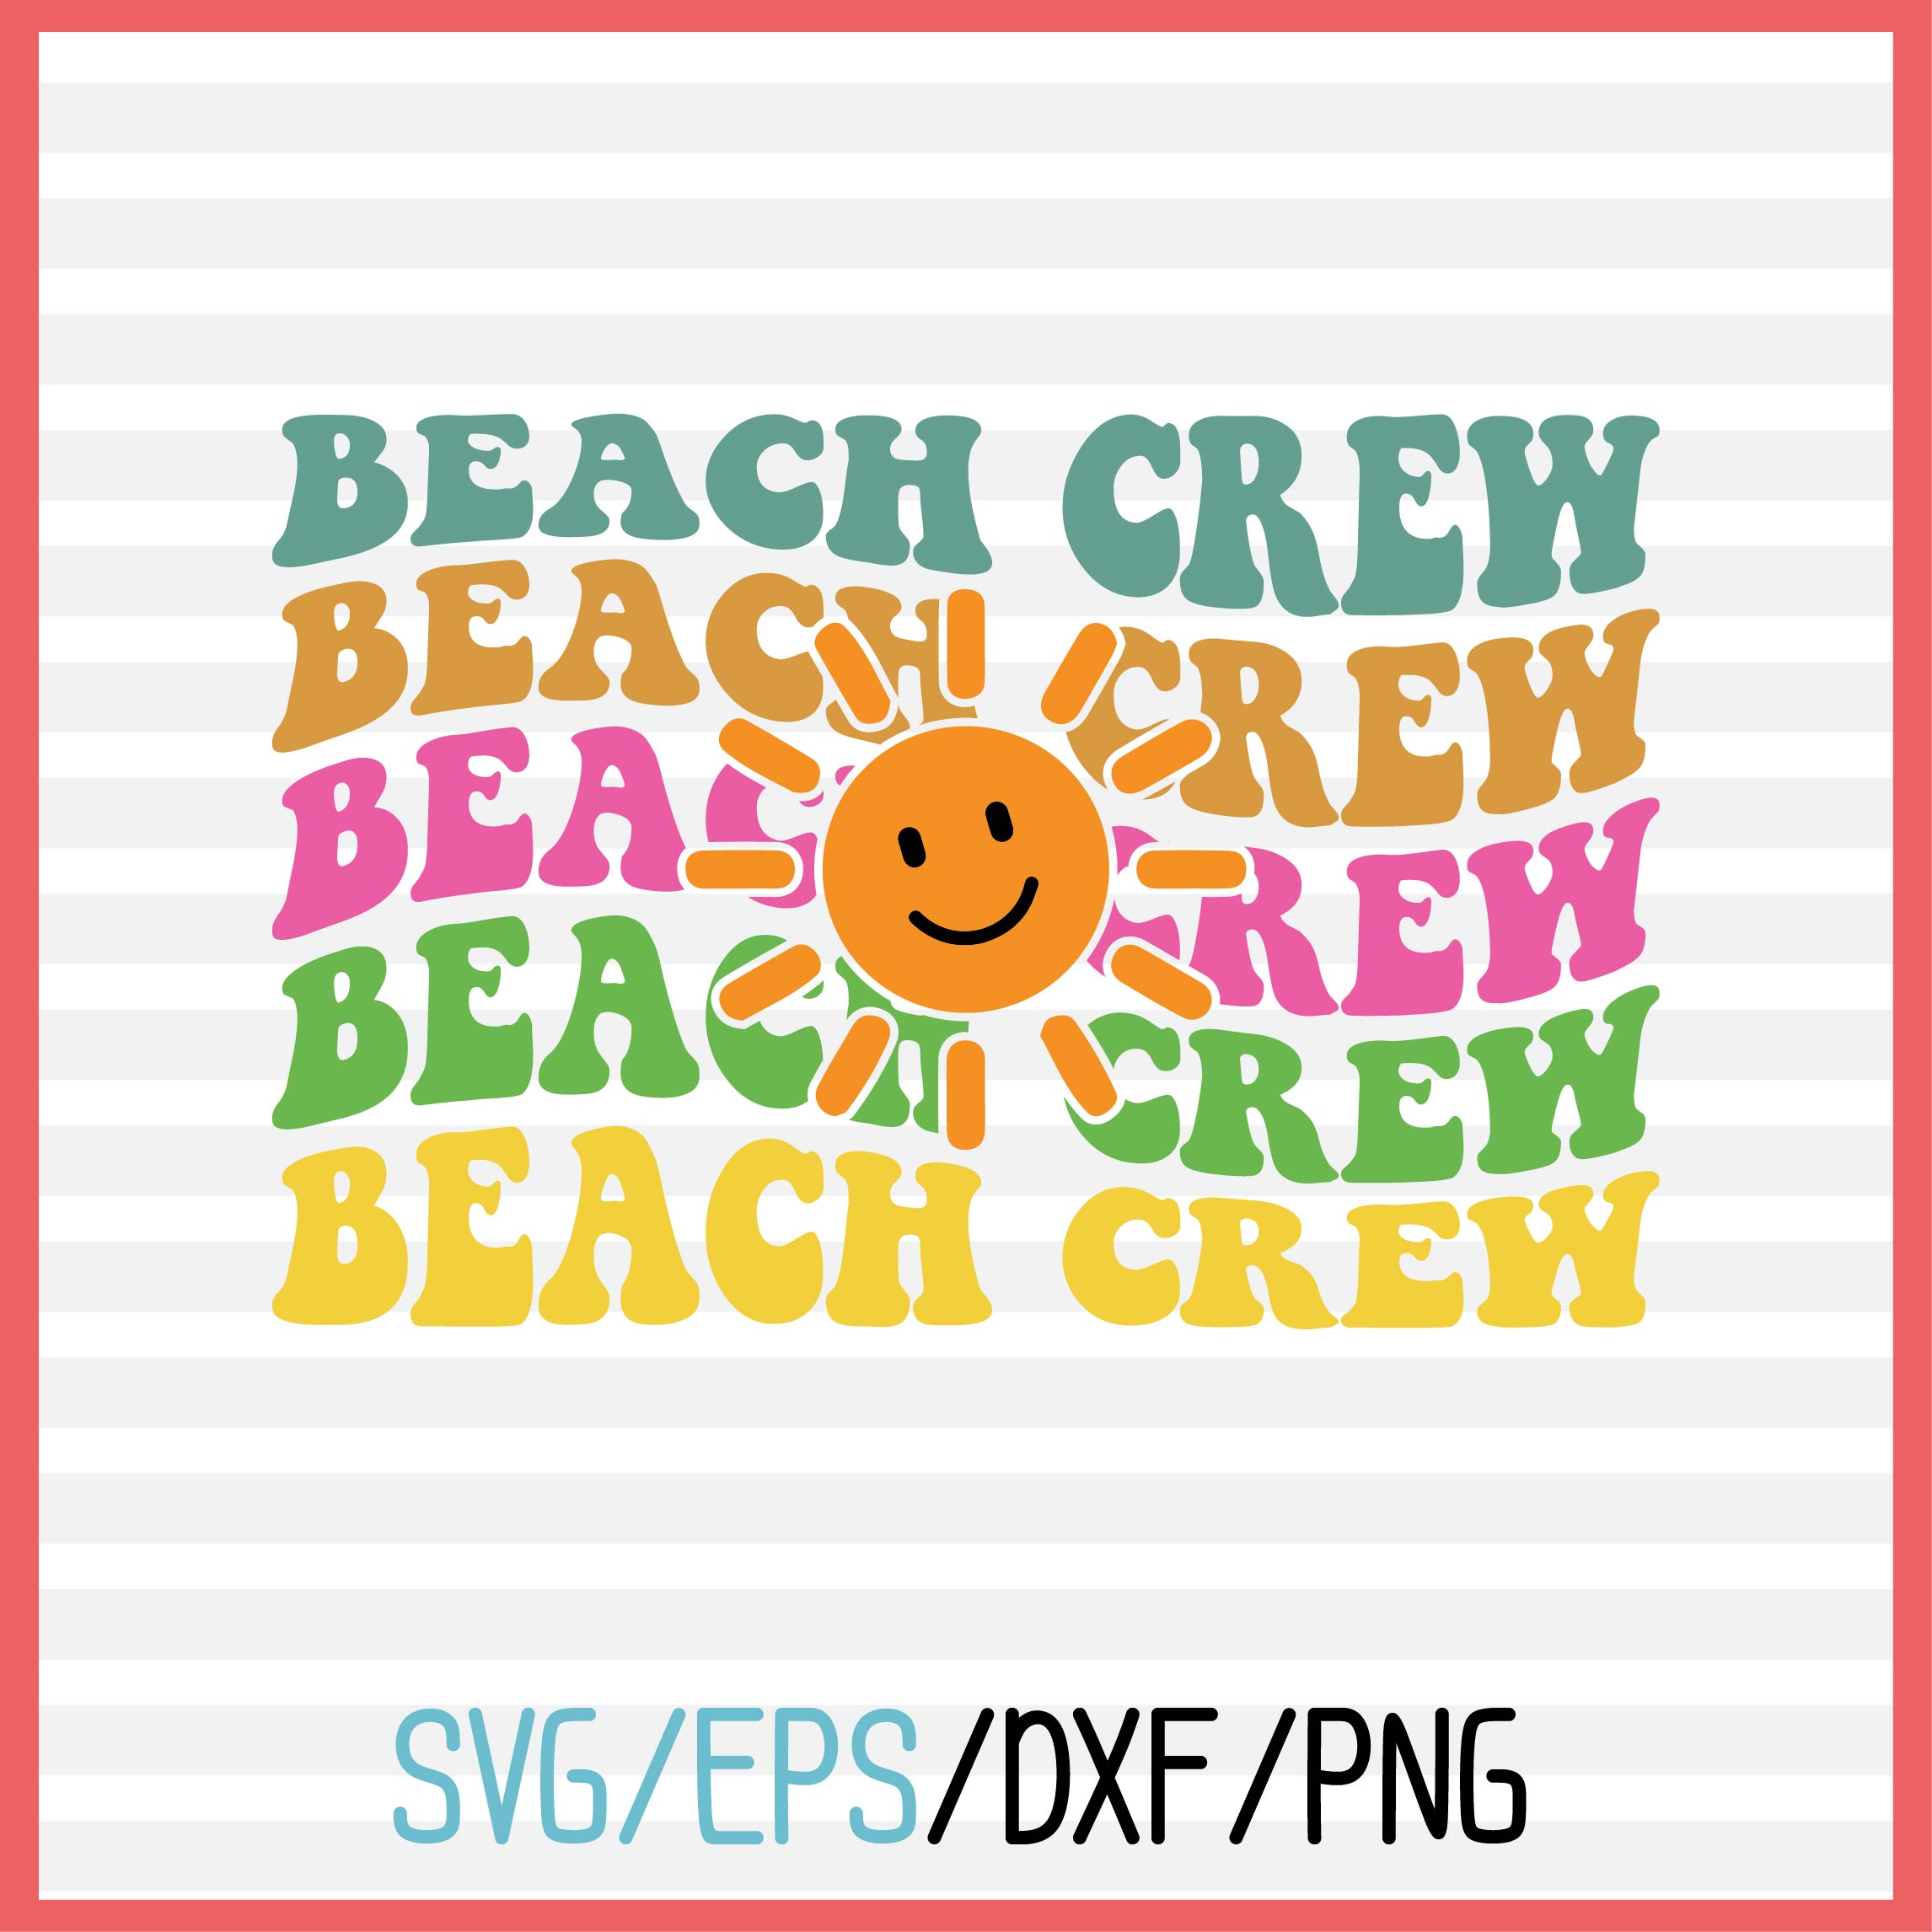 About Beach crew retro svg design cover image.